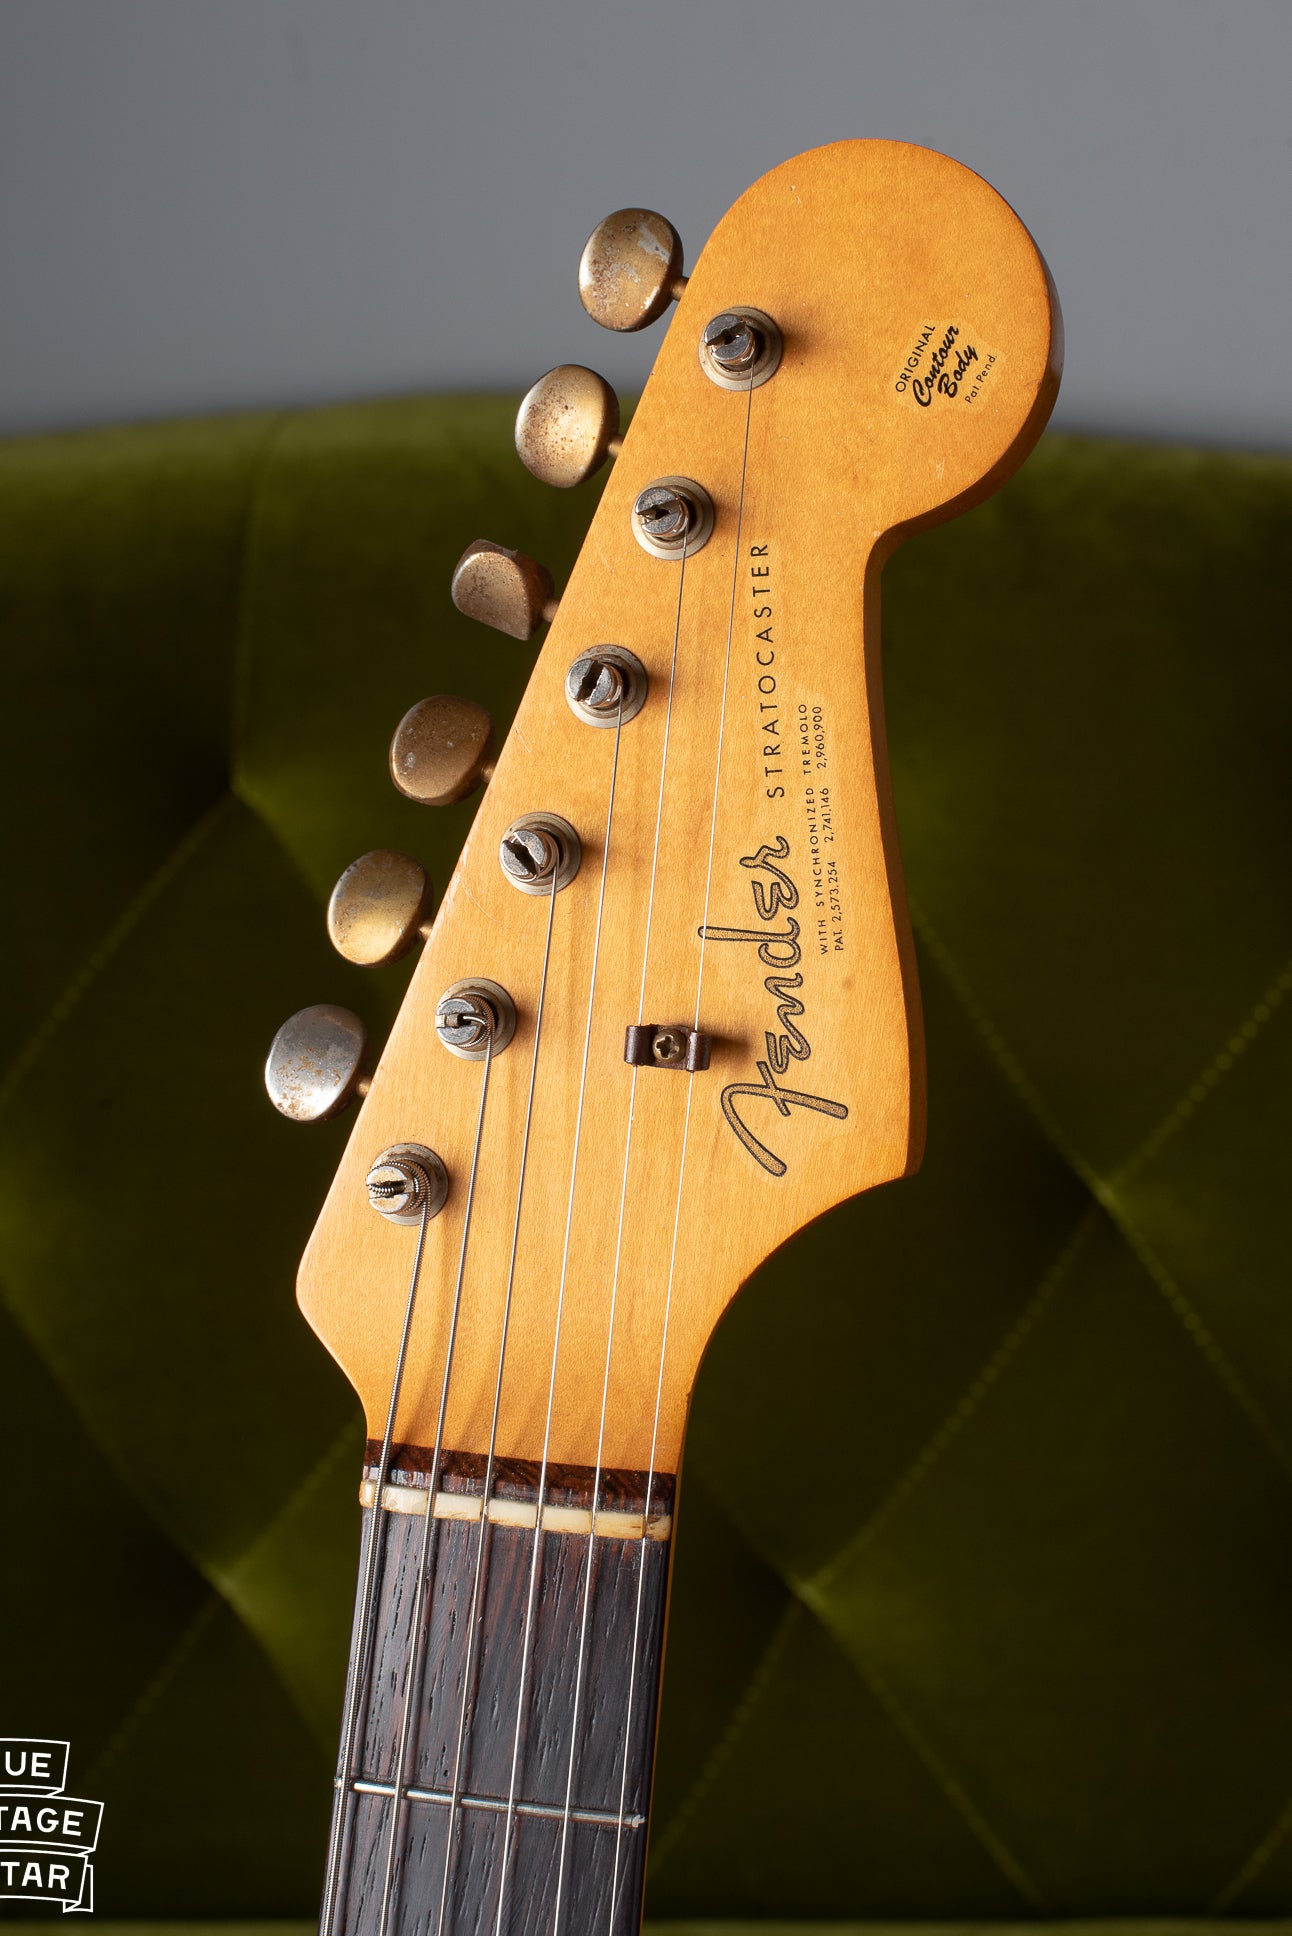 Spaghetti style Fender logo on headstock